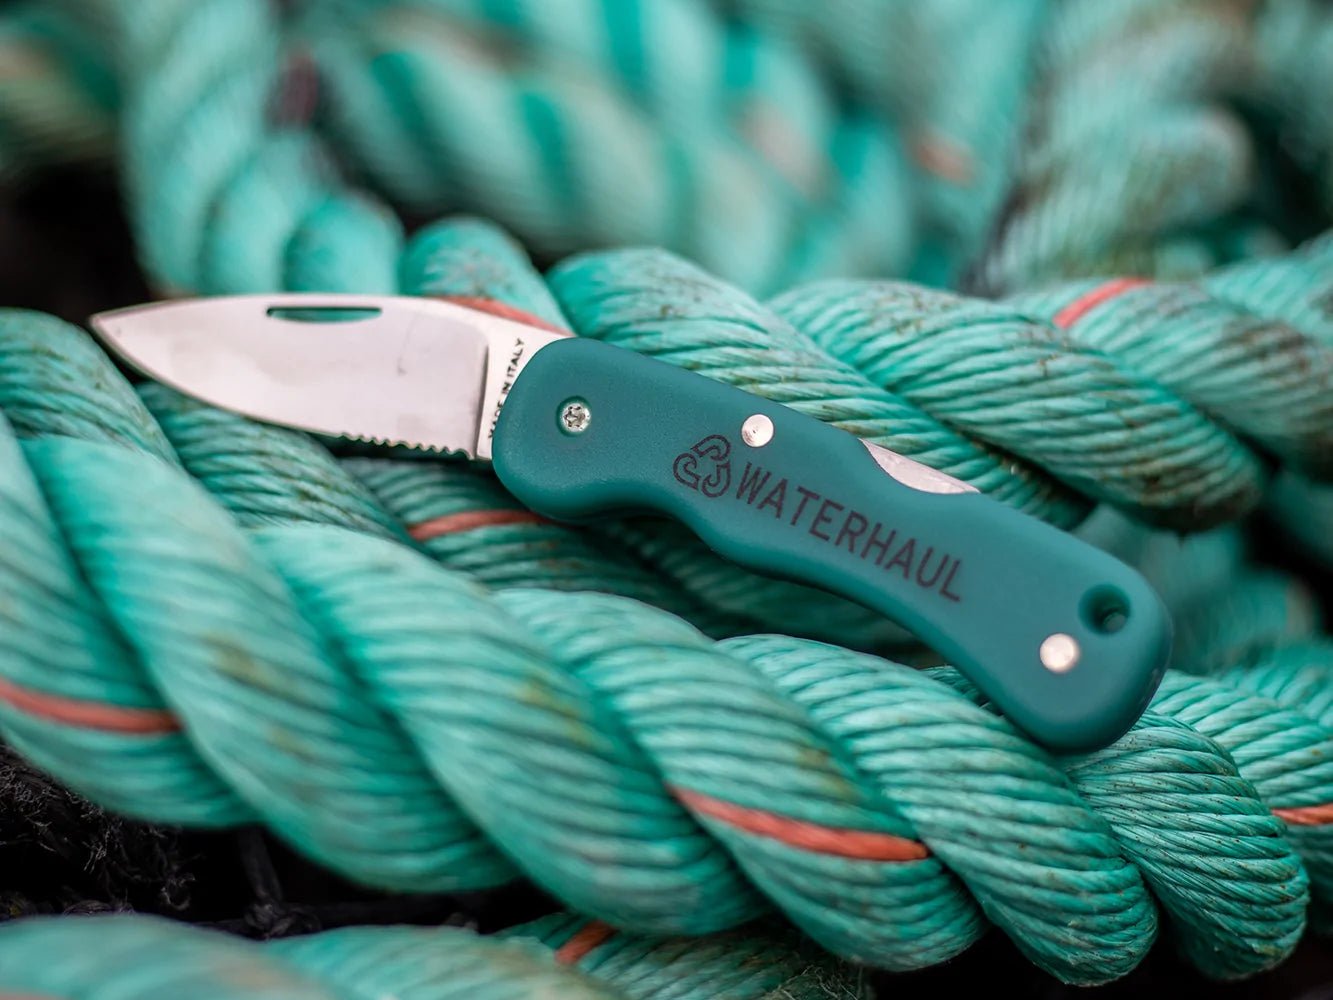 Waterhaul Recycled Adventure knife on green fishing rope